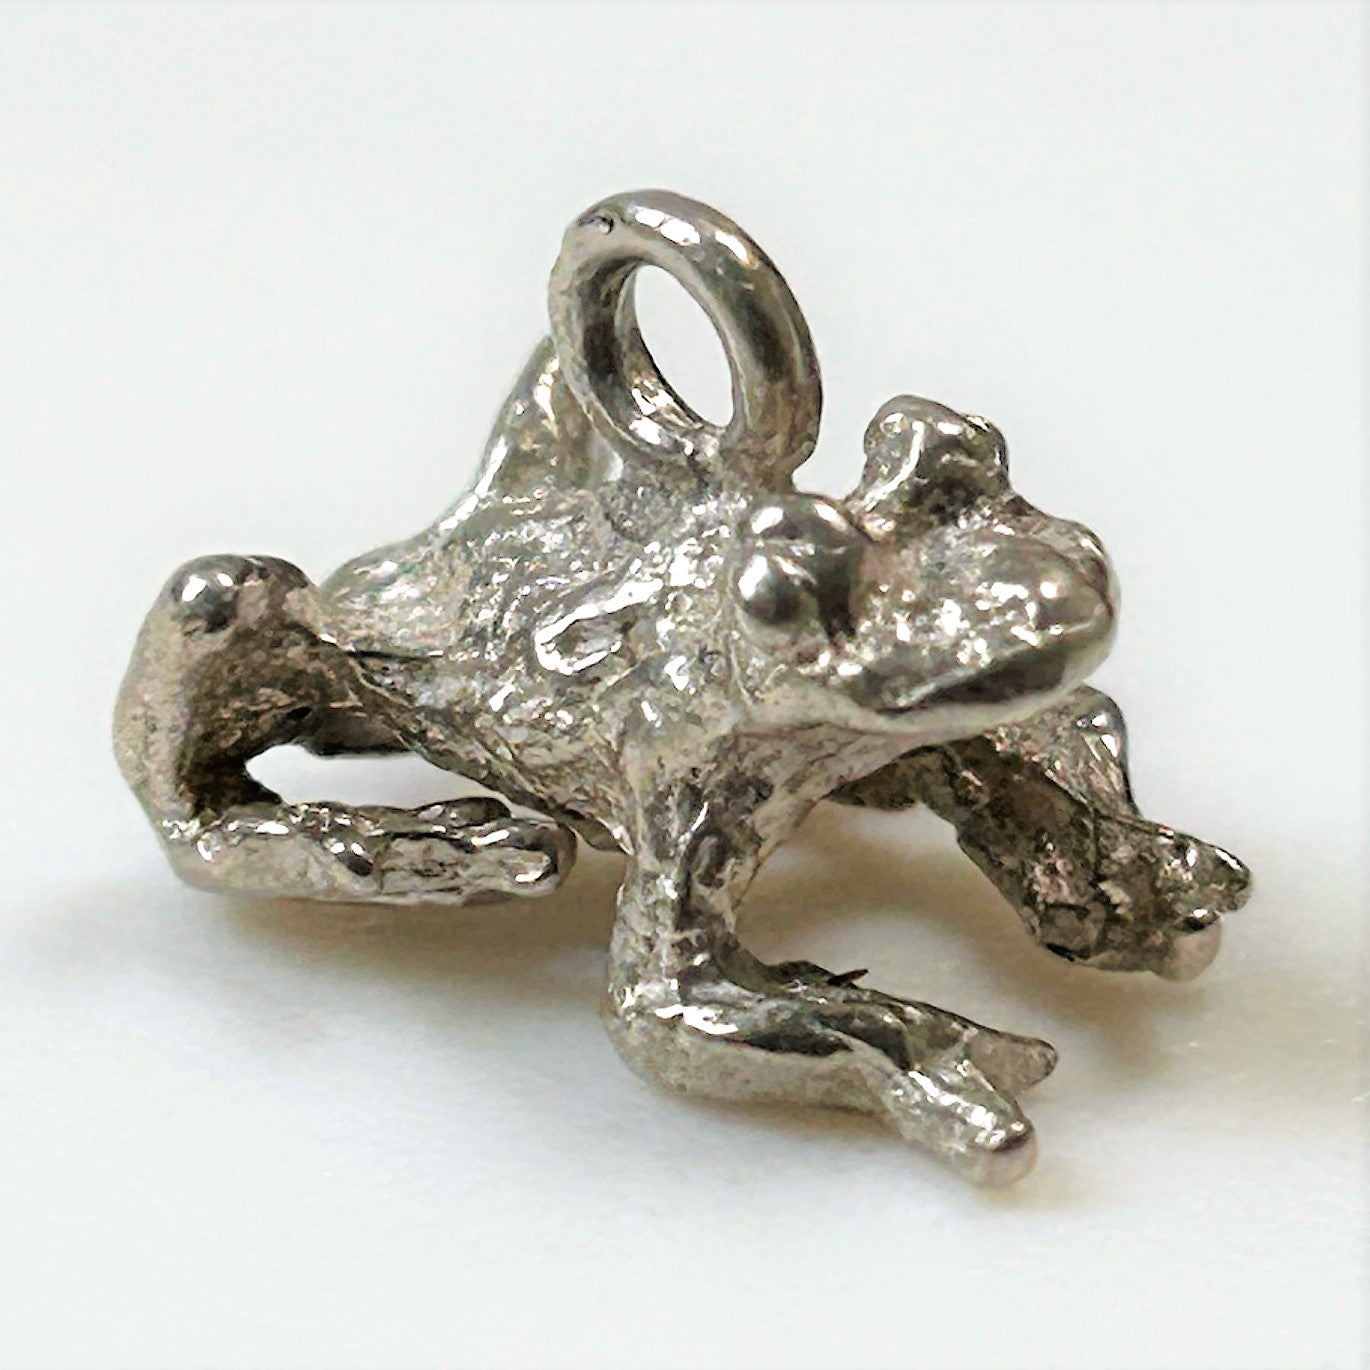 Miniature Silver “Frog” Charm Pendant